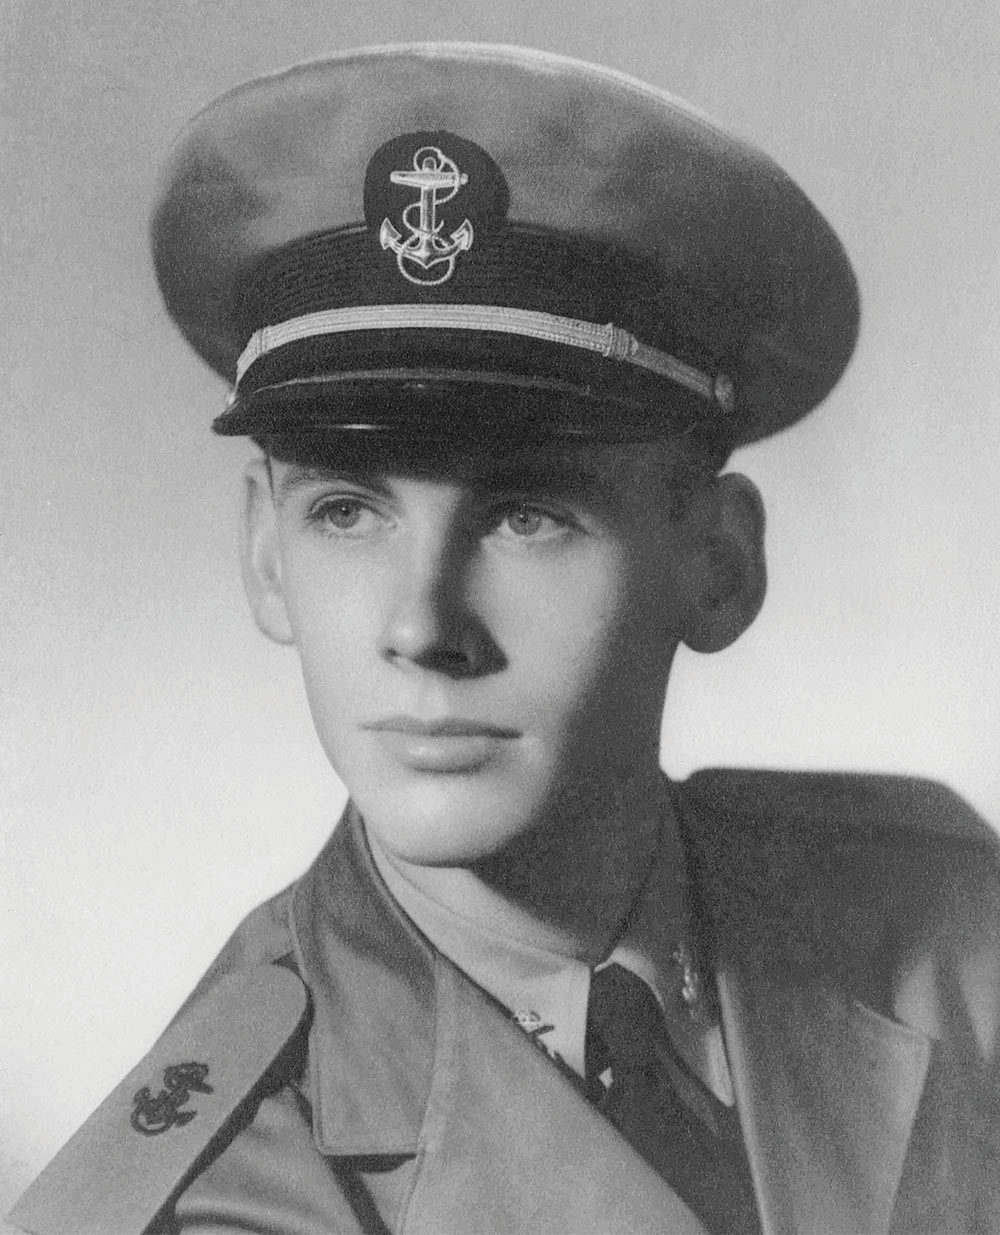 Morton in his Navy uniform in the mid-1940s